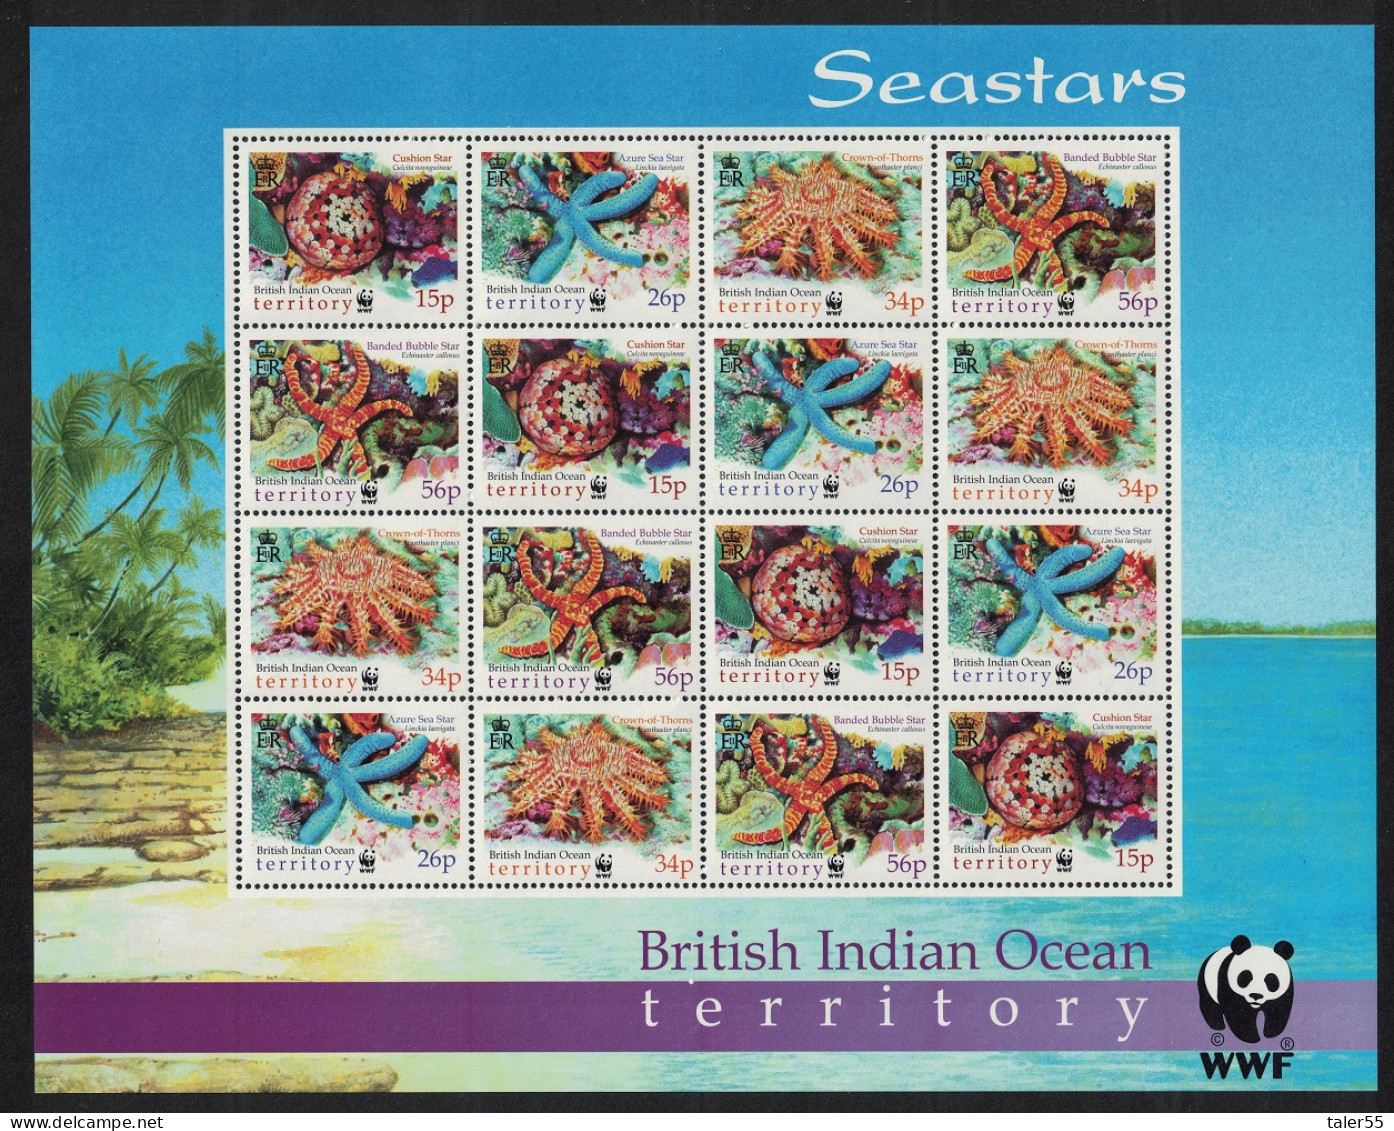 BIOT WWF Sea Stars Sheetlet Of 4 Sets 2001 MNH SG#253-256 MI#266-269 Sc#231-234 - Territorio Británico Del Océano Índico